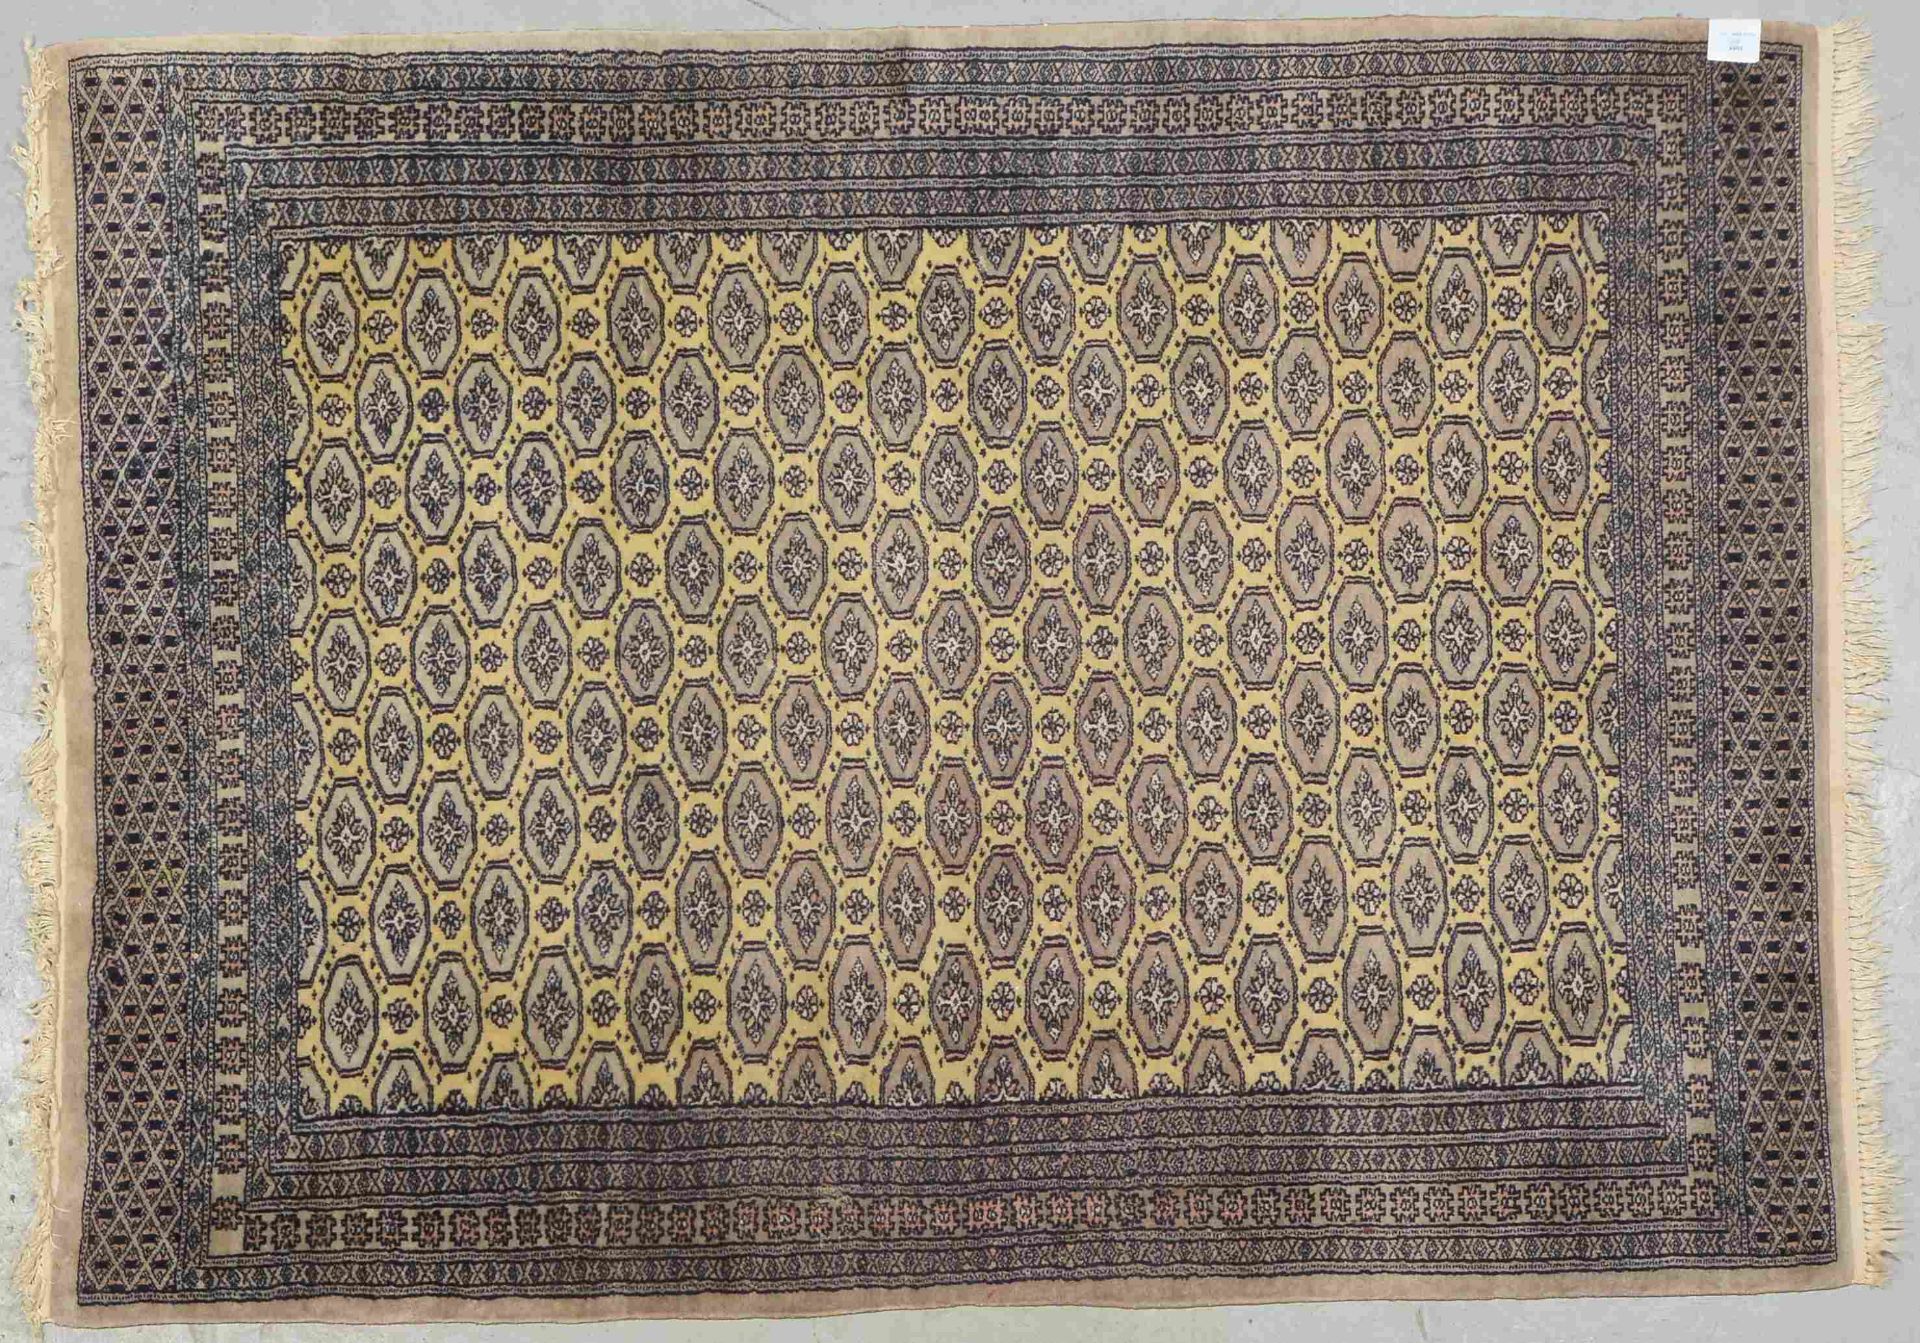 Orientteppich (Pakistan), feine Knüpfung, Flor in gutem Zustand; Maße 170 x 125 cm